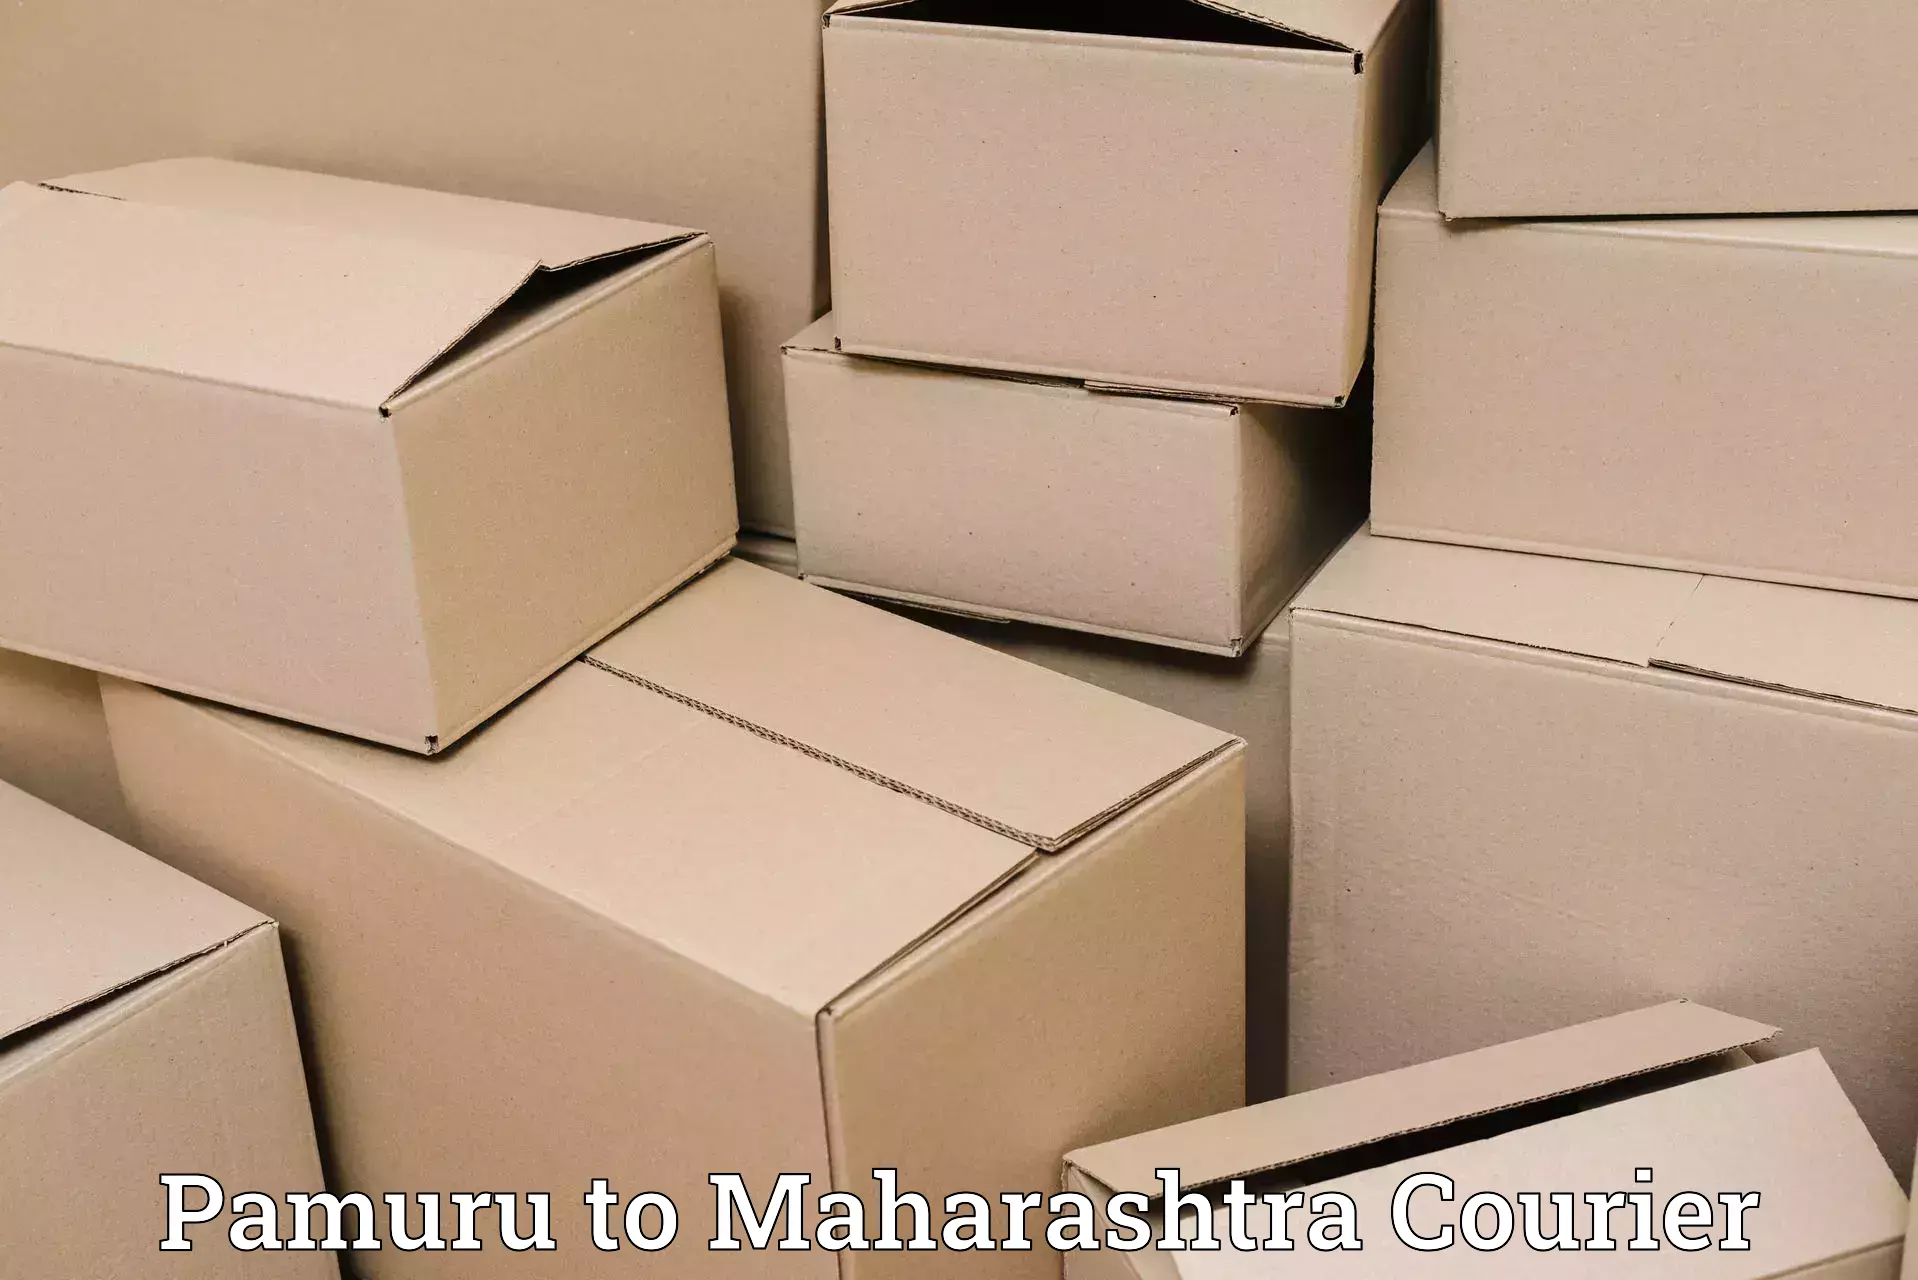 Personalized courier experiences Pamuru to Maharashtra